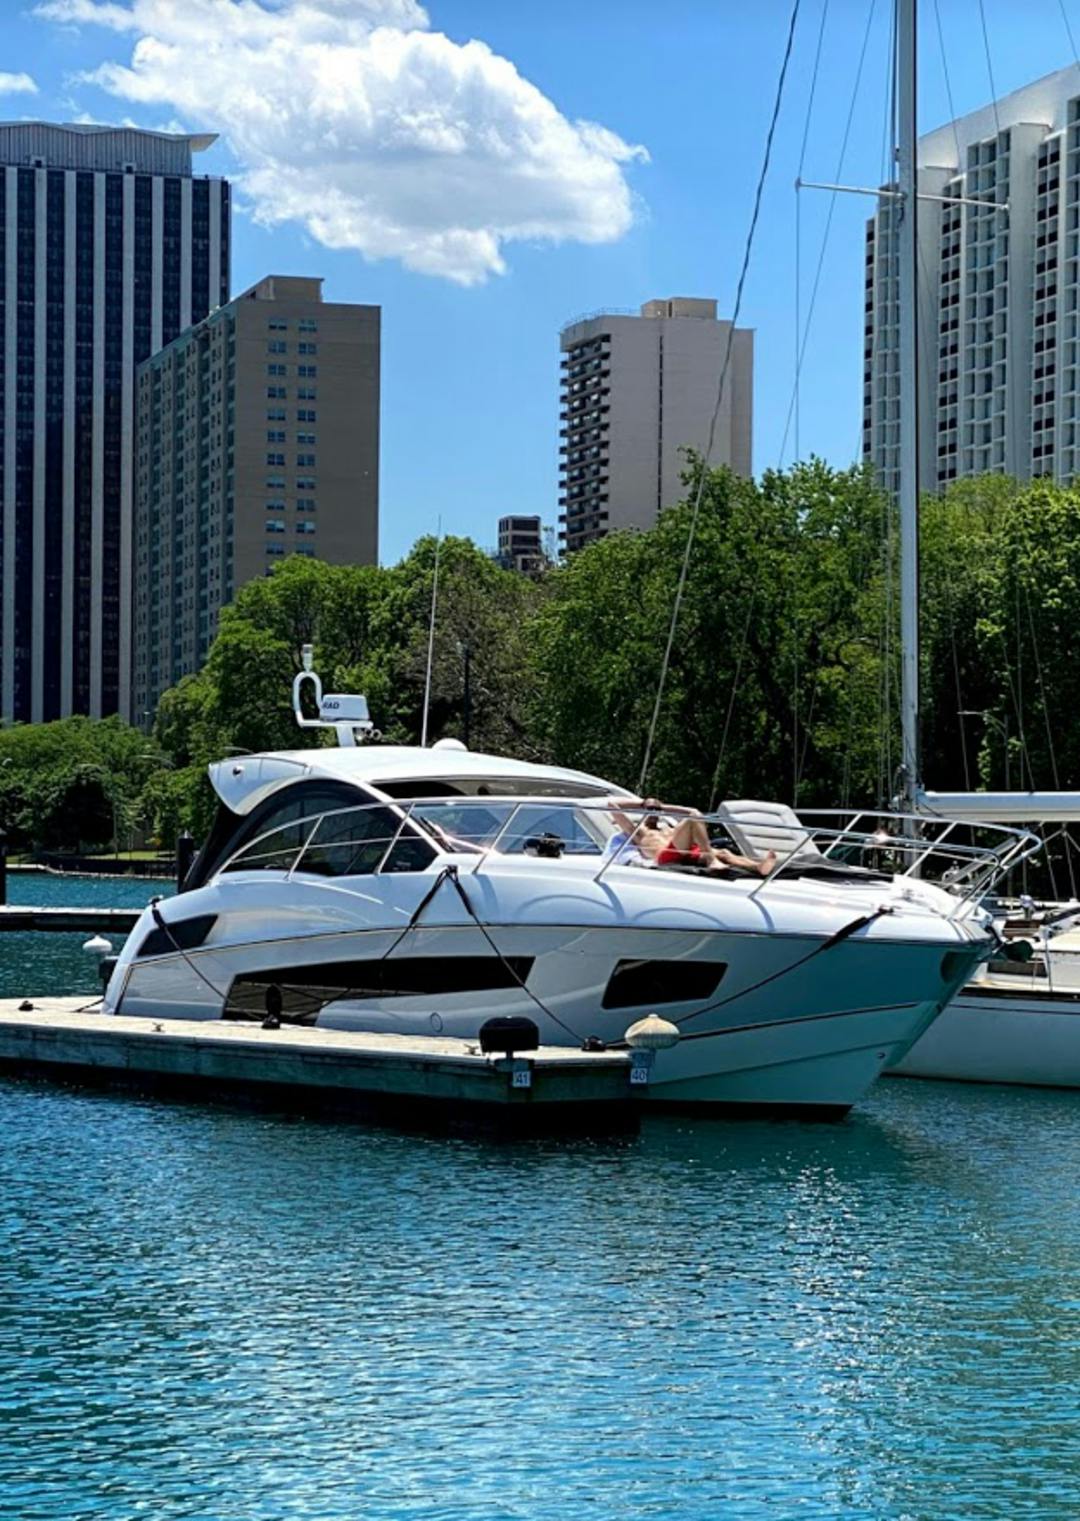 40 Sunseeker luxury charter yacht - Belmont Harbor, Chicago, IL, USA